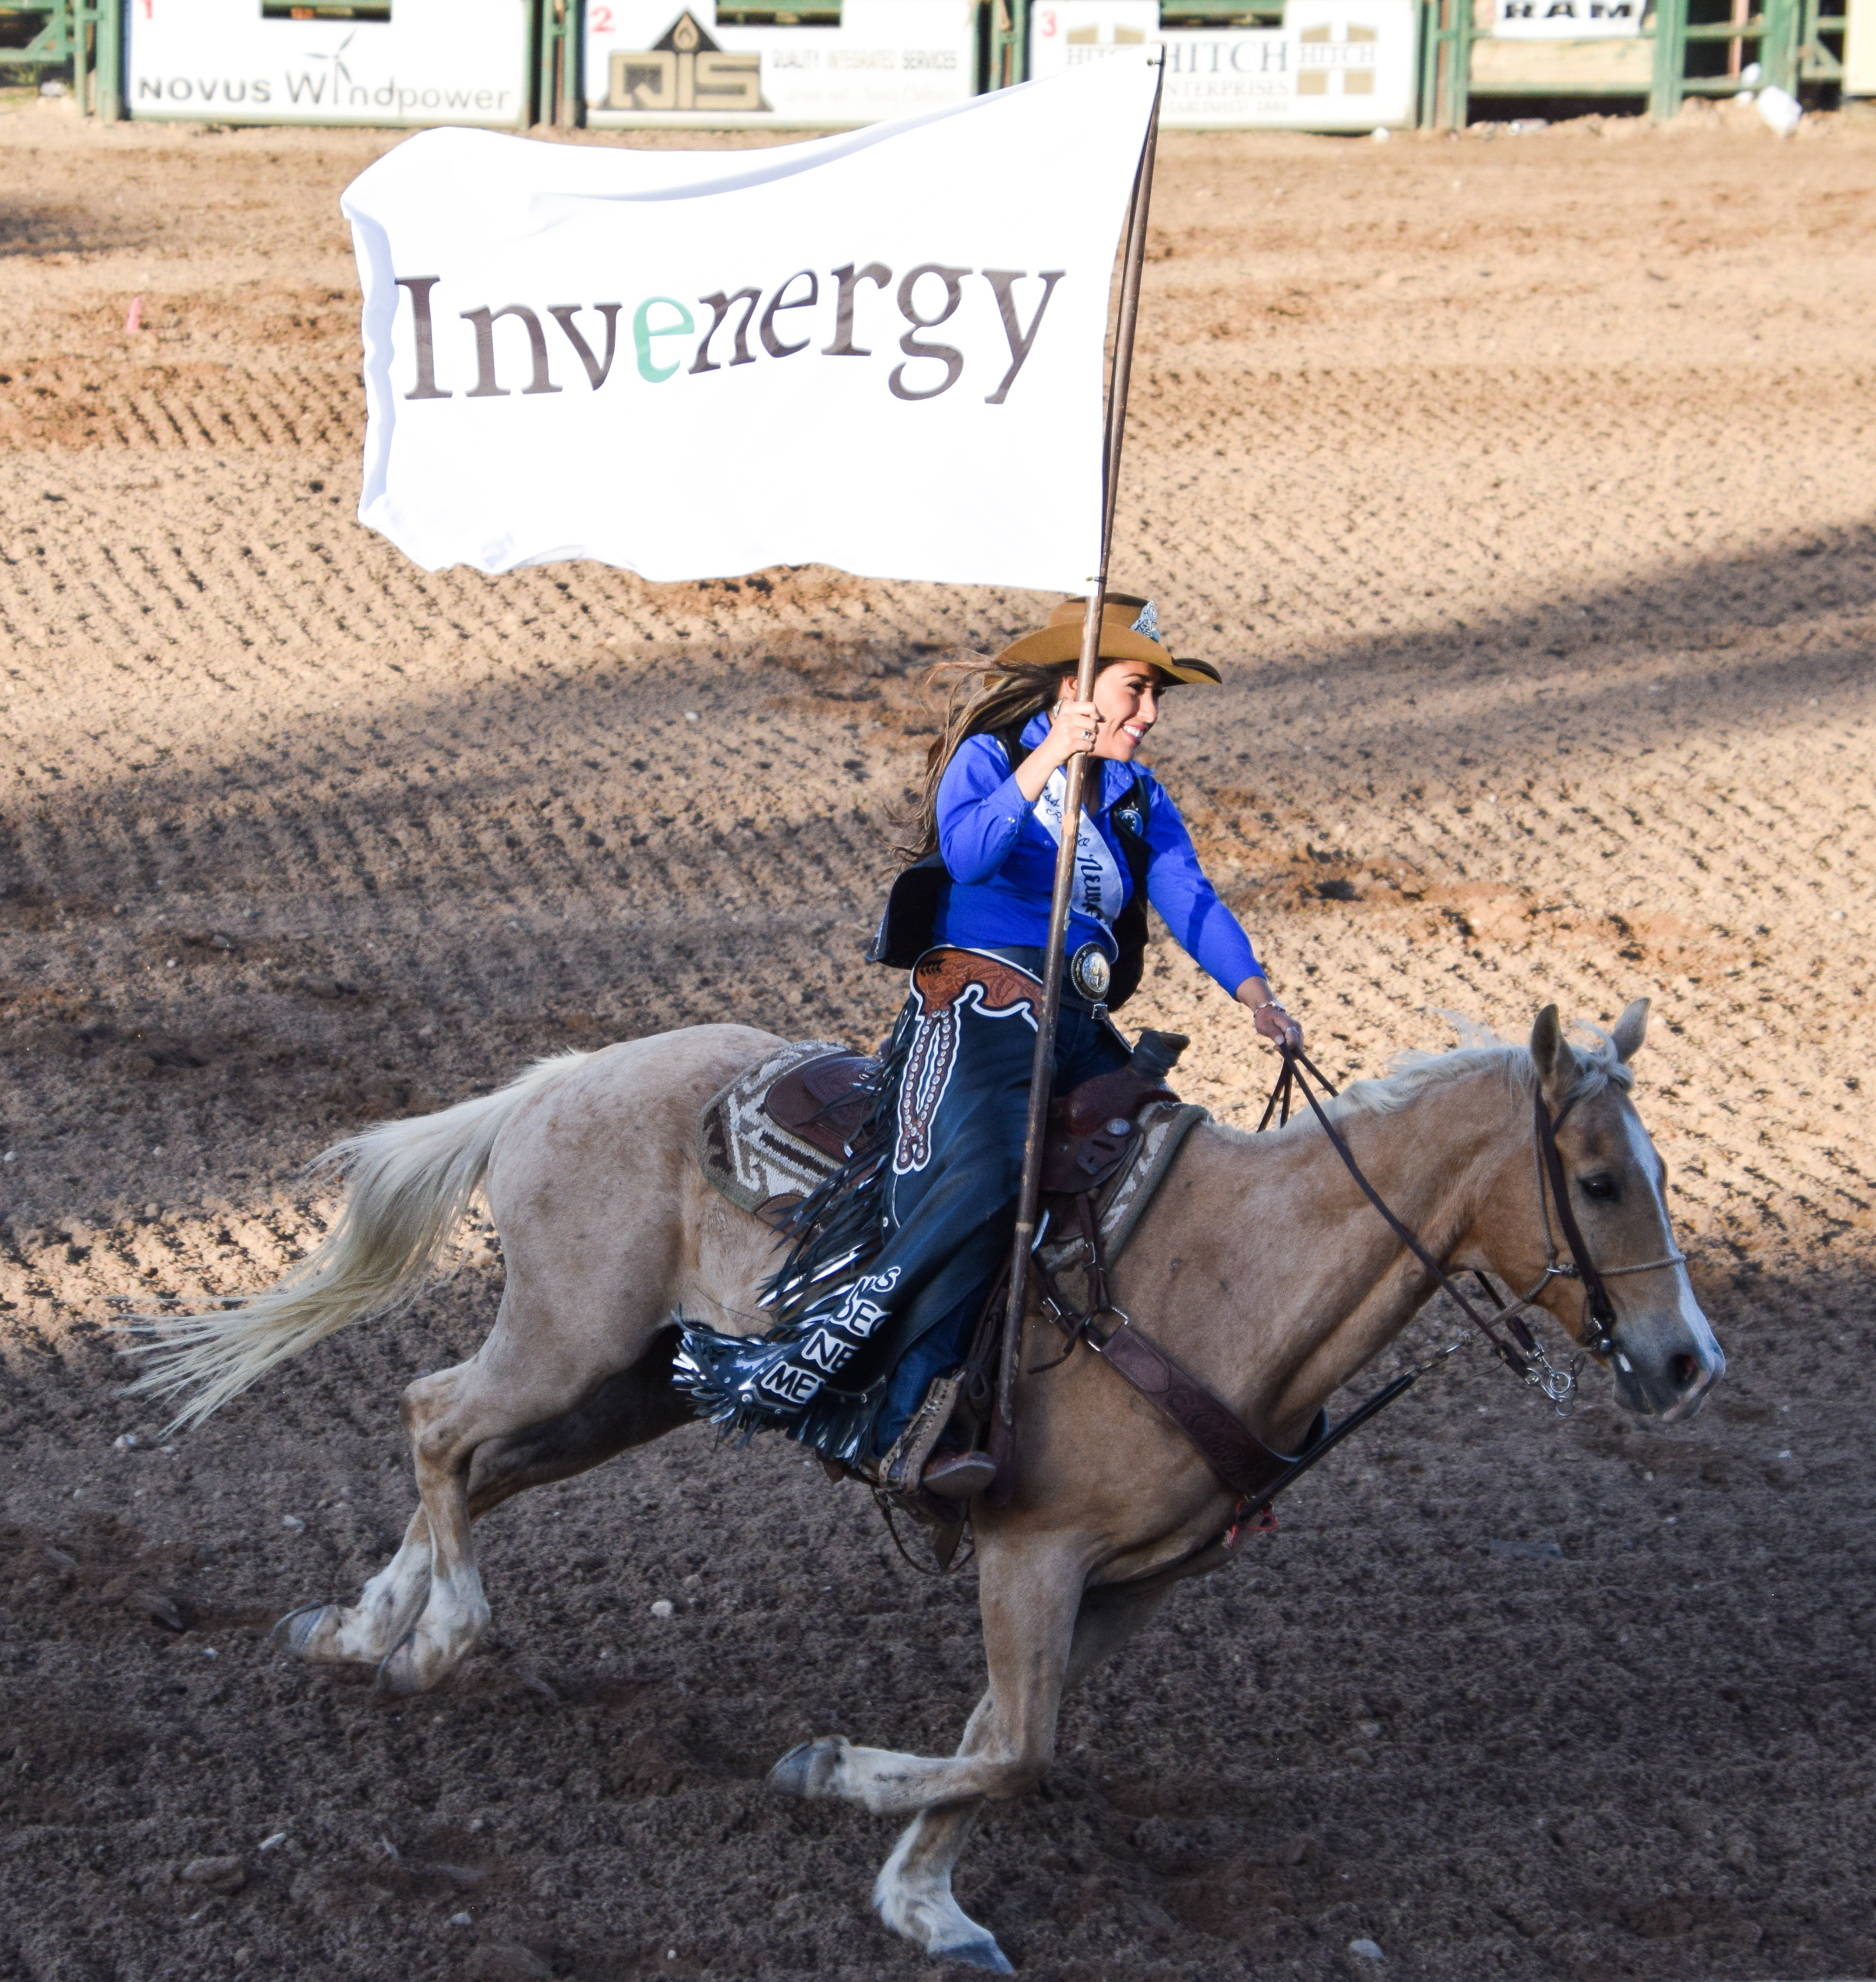 Rodeo-Queen-carrying-the-Invenergy-sponsor-flag.jpg